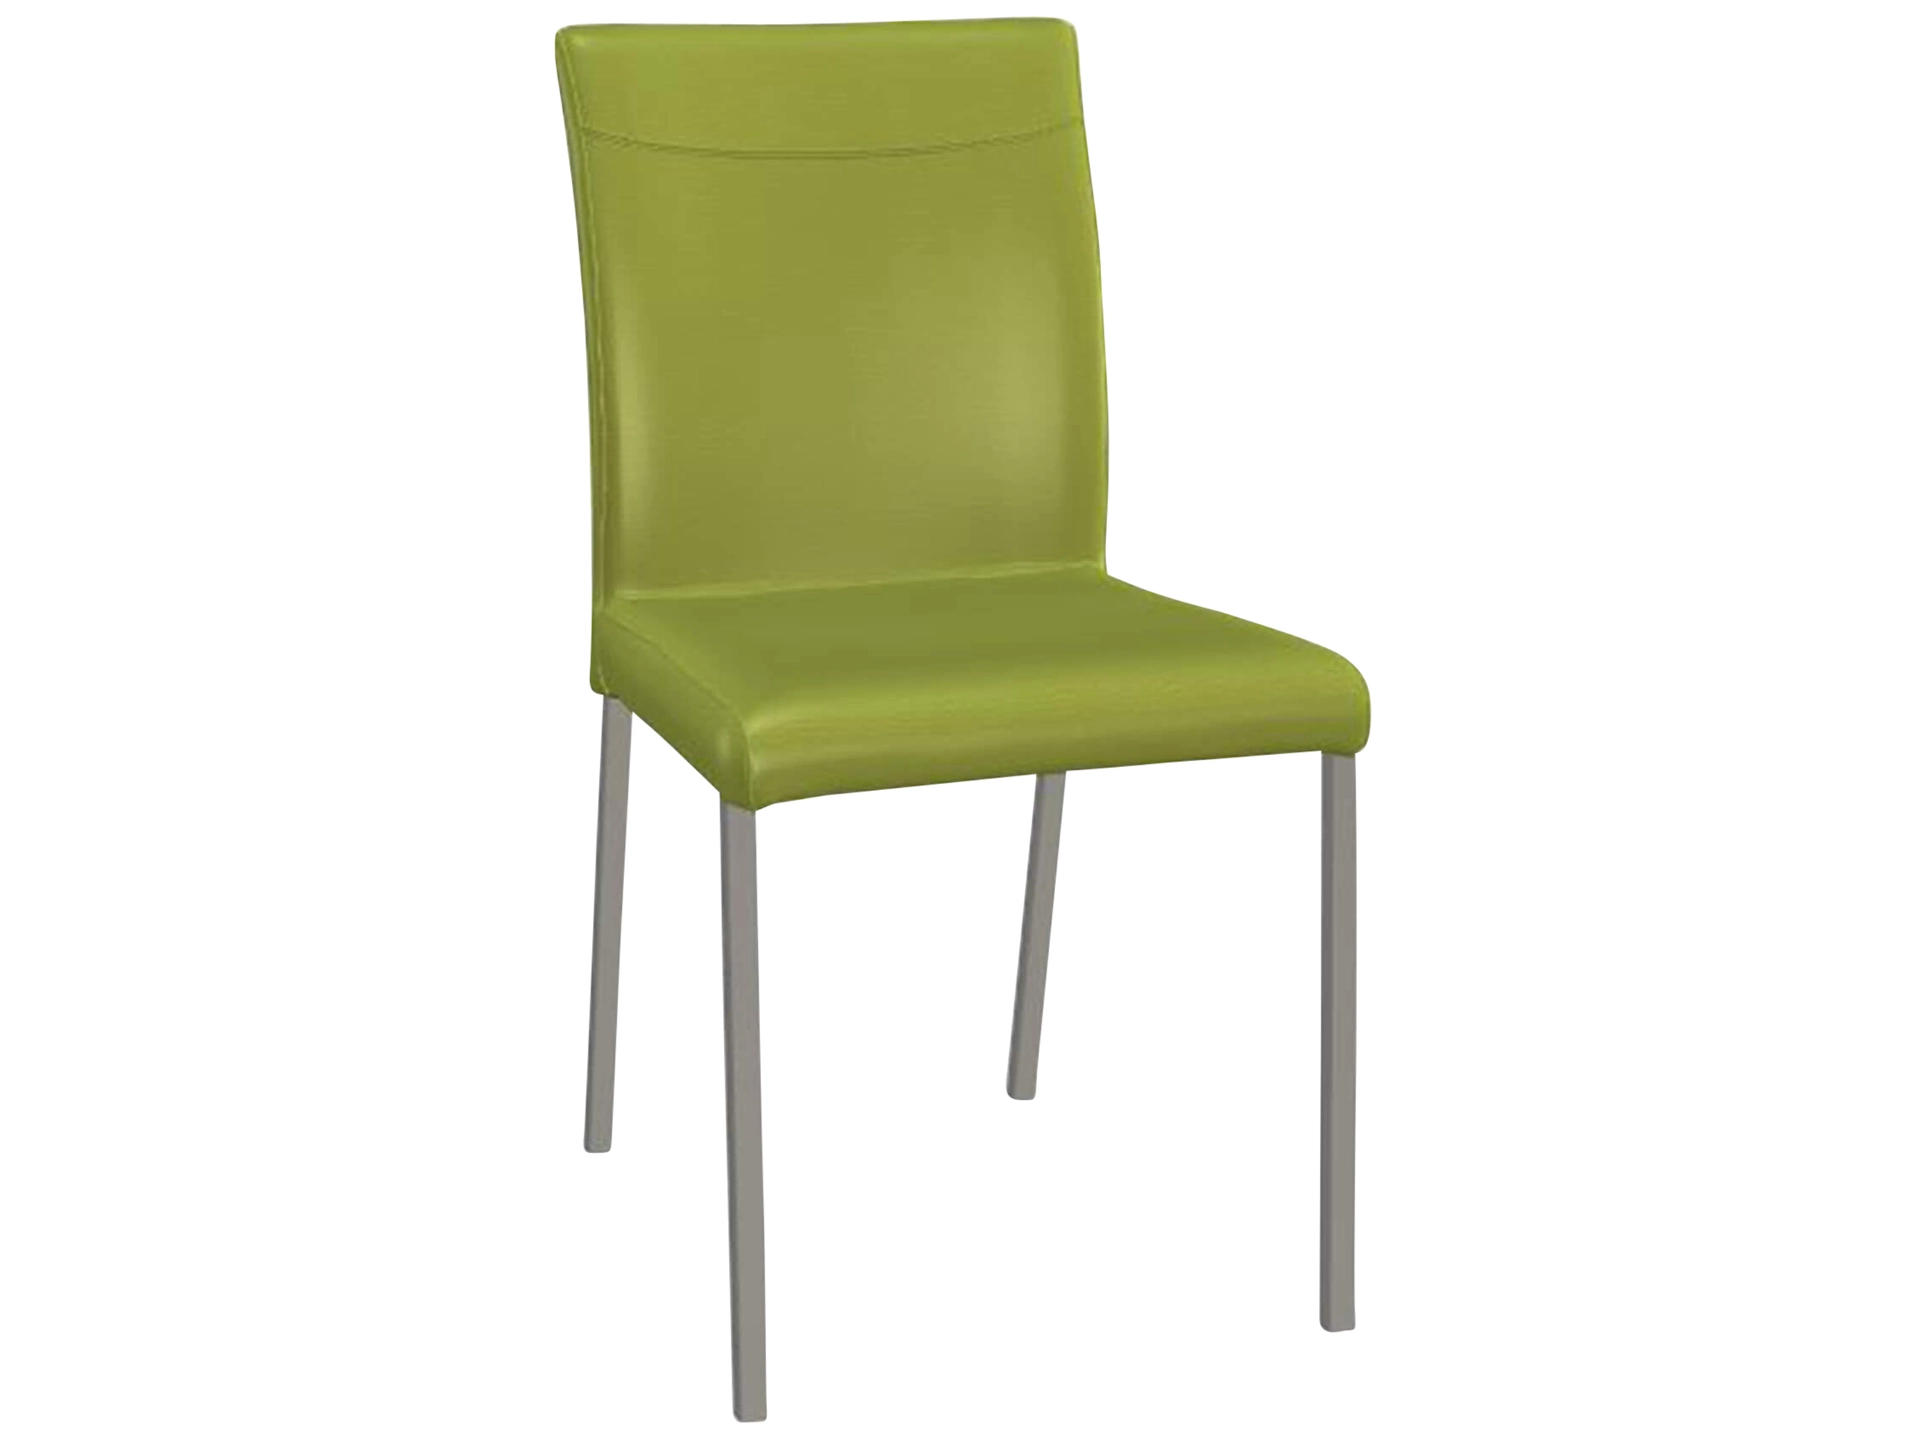 Stuhl Leicht Premium Trendstühle / Farbe: Lime / Material: Leder